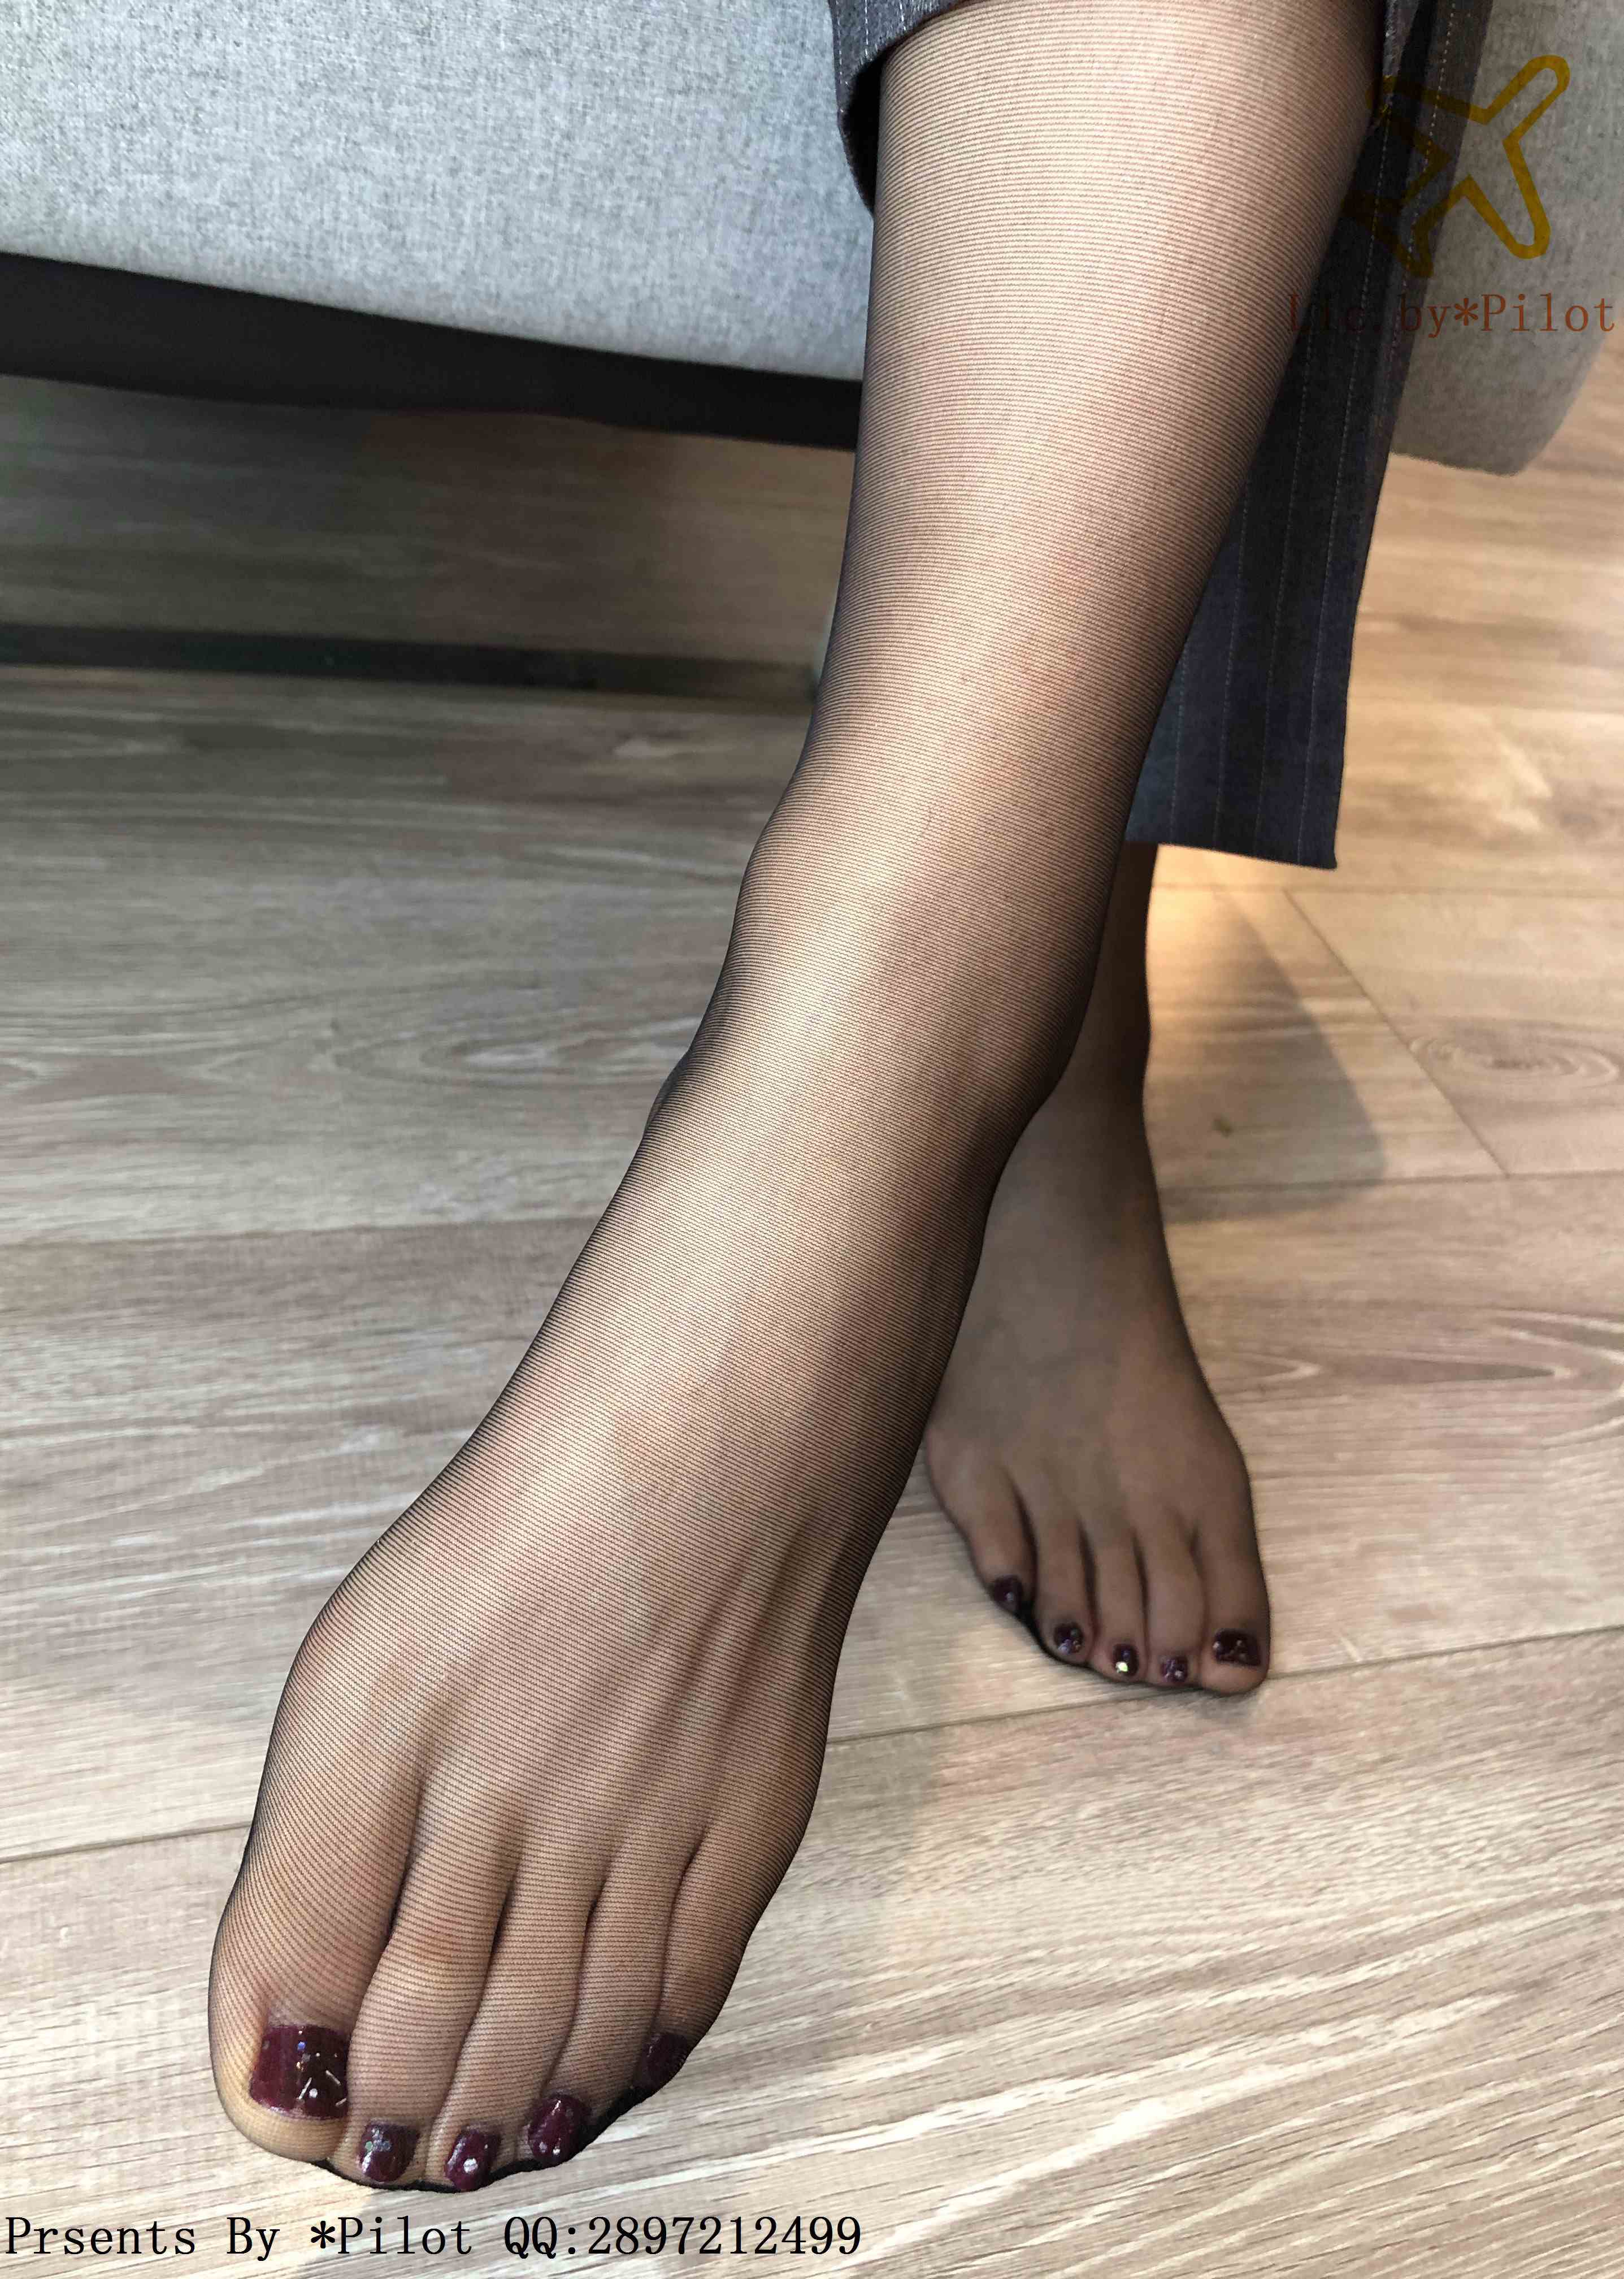 China Beauty Legs and feet 662